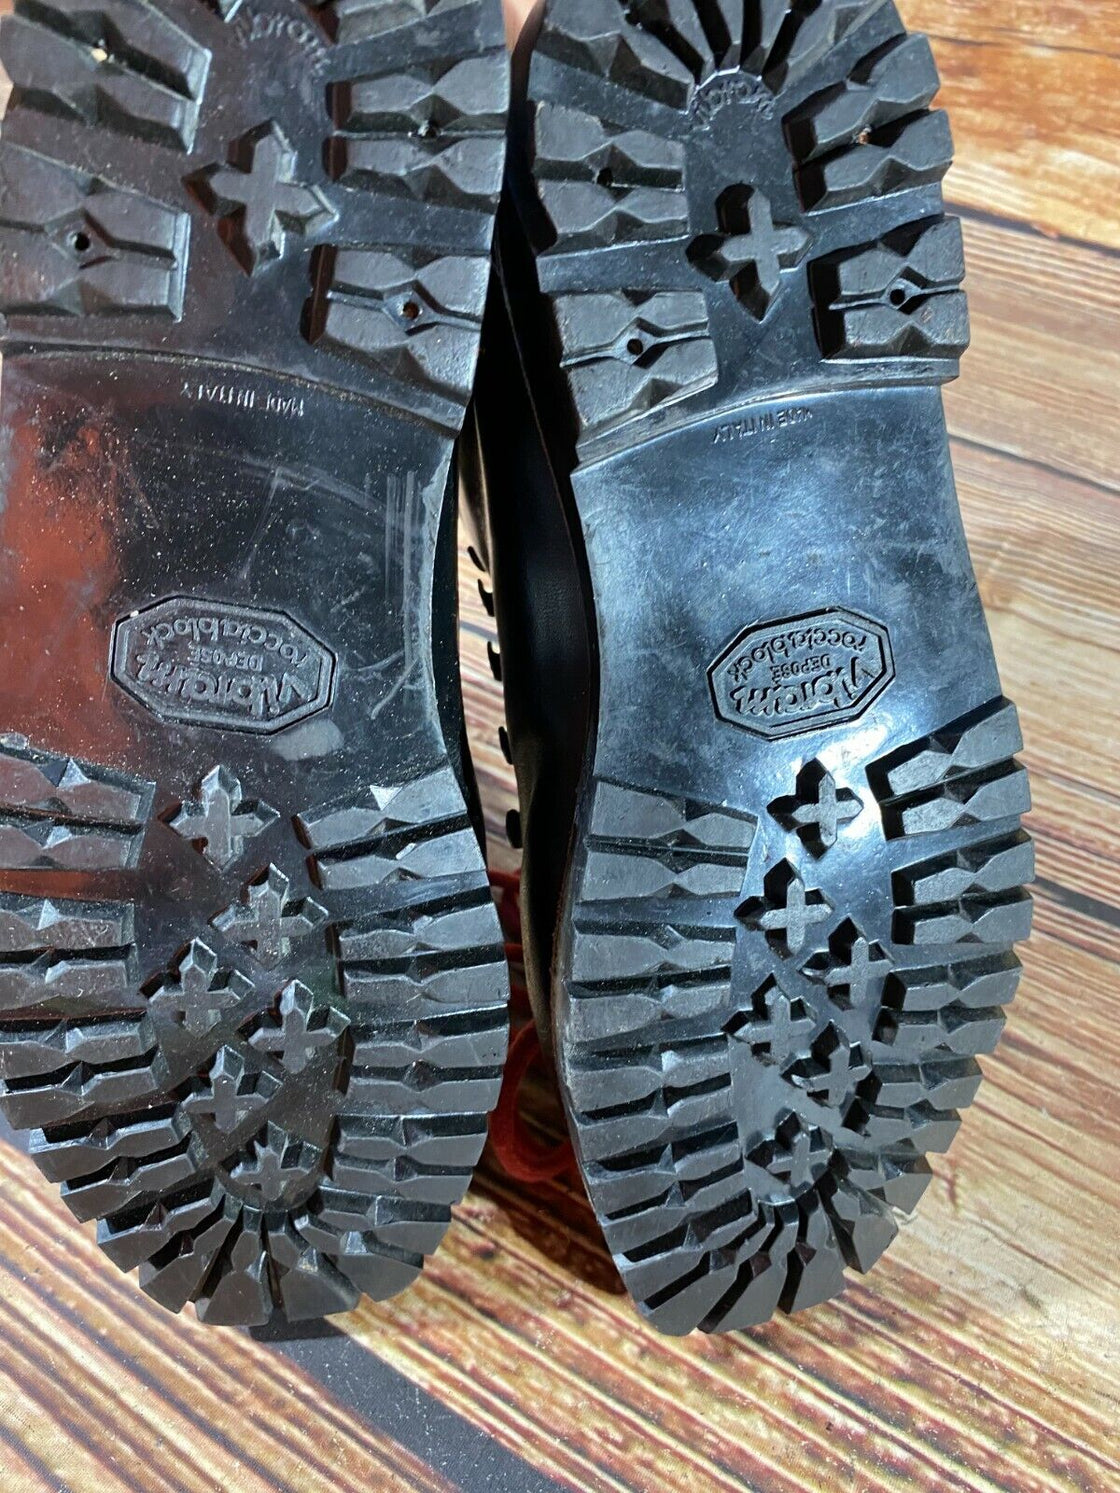 ROCCIA Leather Vintage Alpine Ski Boots EU41, US7.5, Mondo 260 Cable Bindings